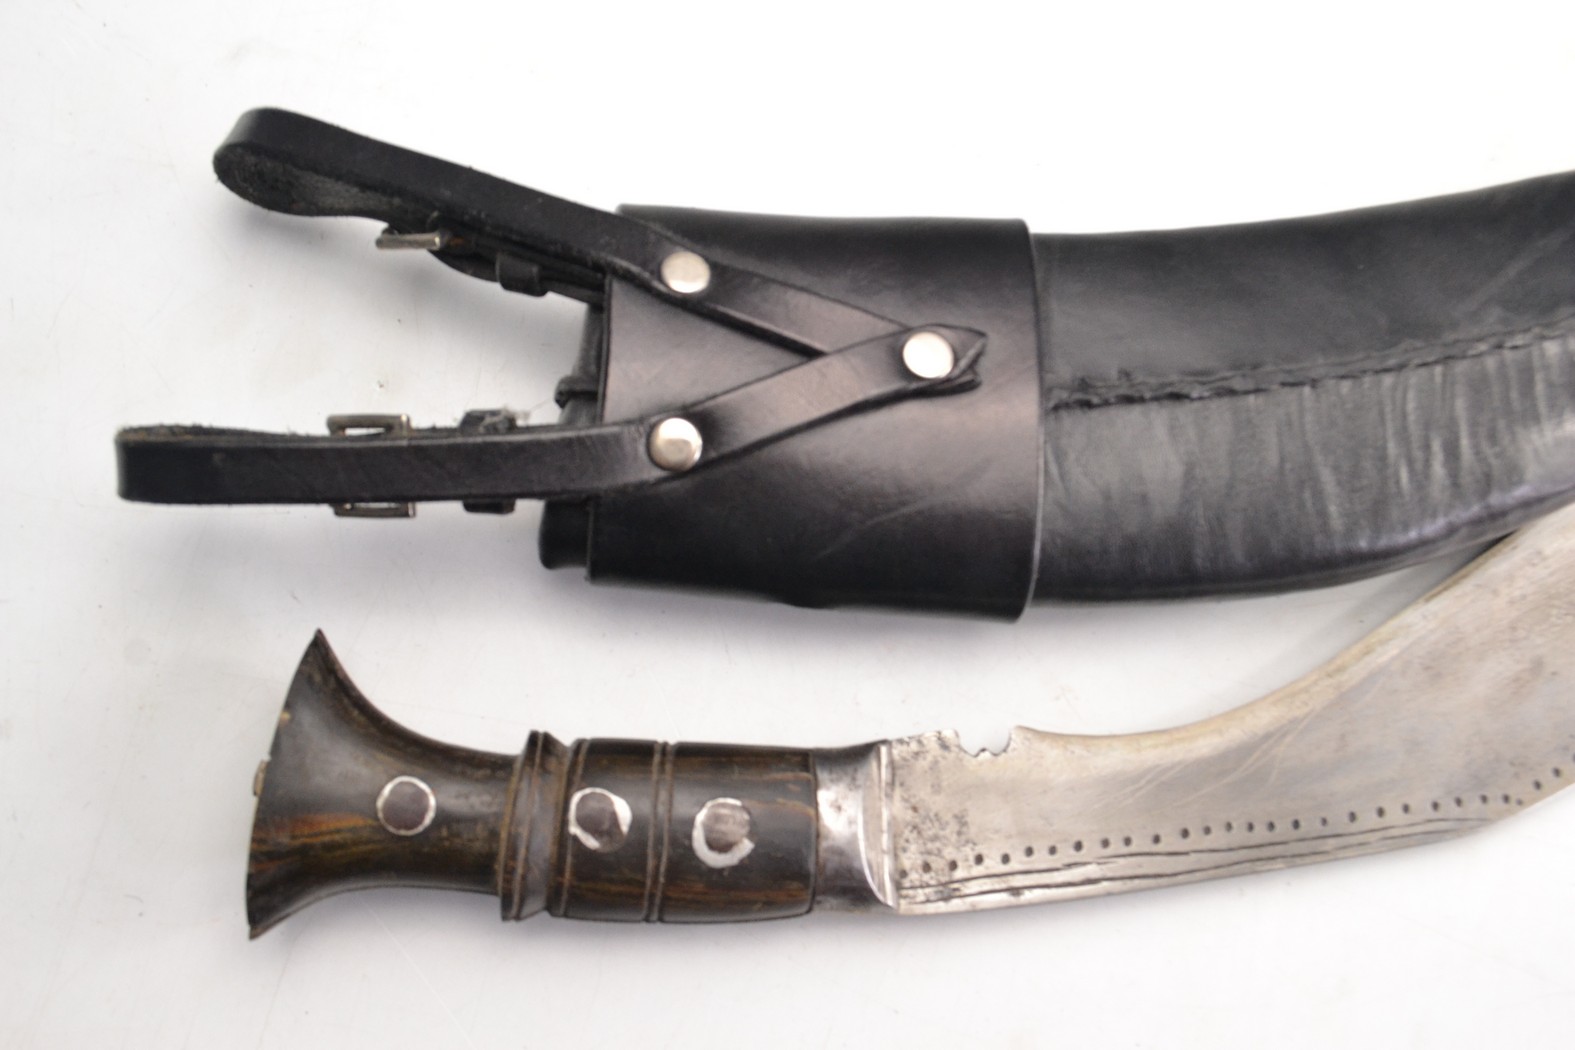 Gurkha Kukri knife with black leather sheath, blade length 30cm approx. - Image 5 of 10